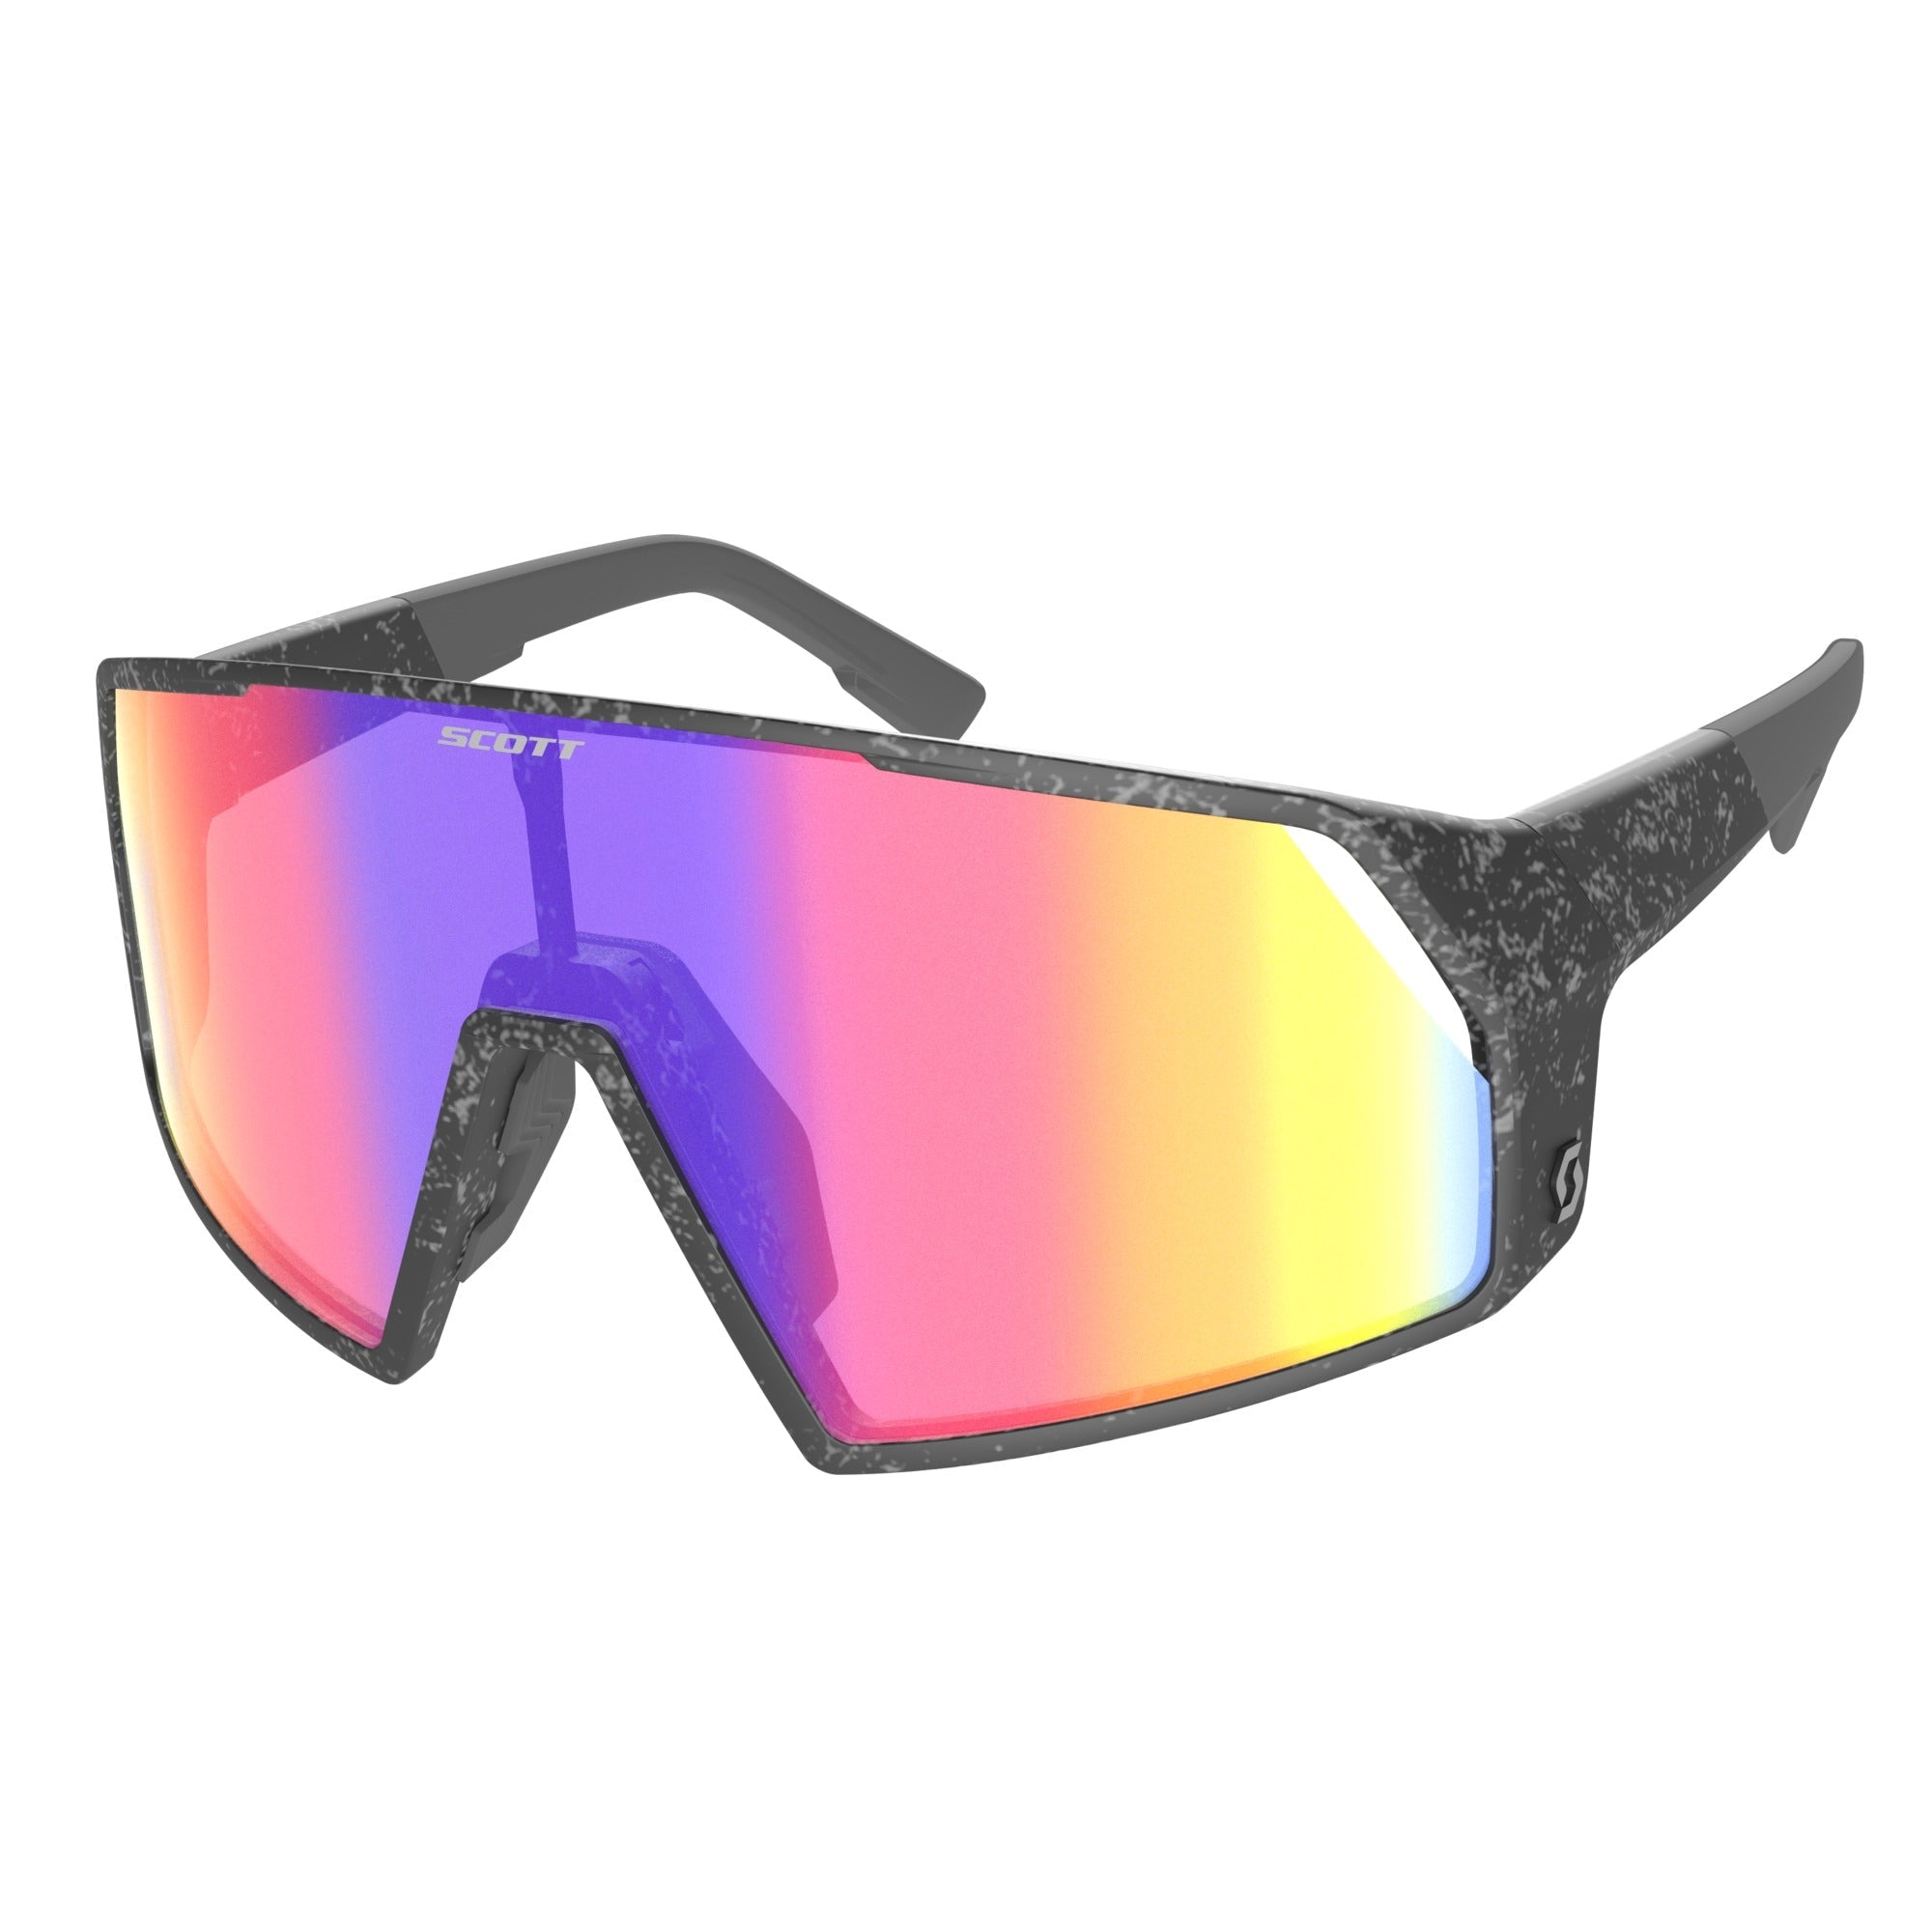 Scott Sunglasses Pro Shield, Marble Black / Teal Chrome